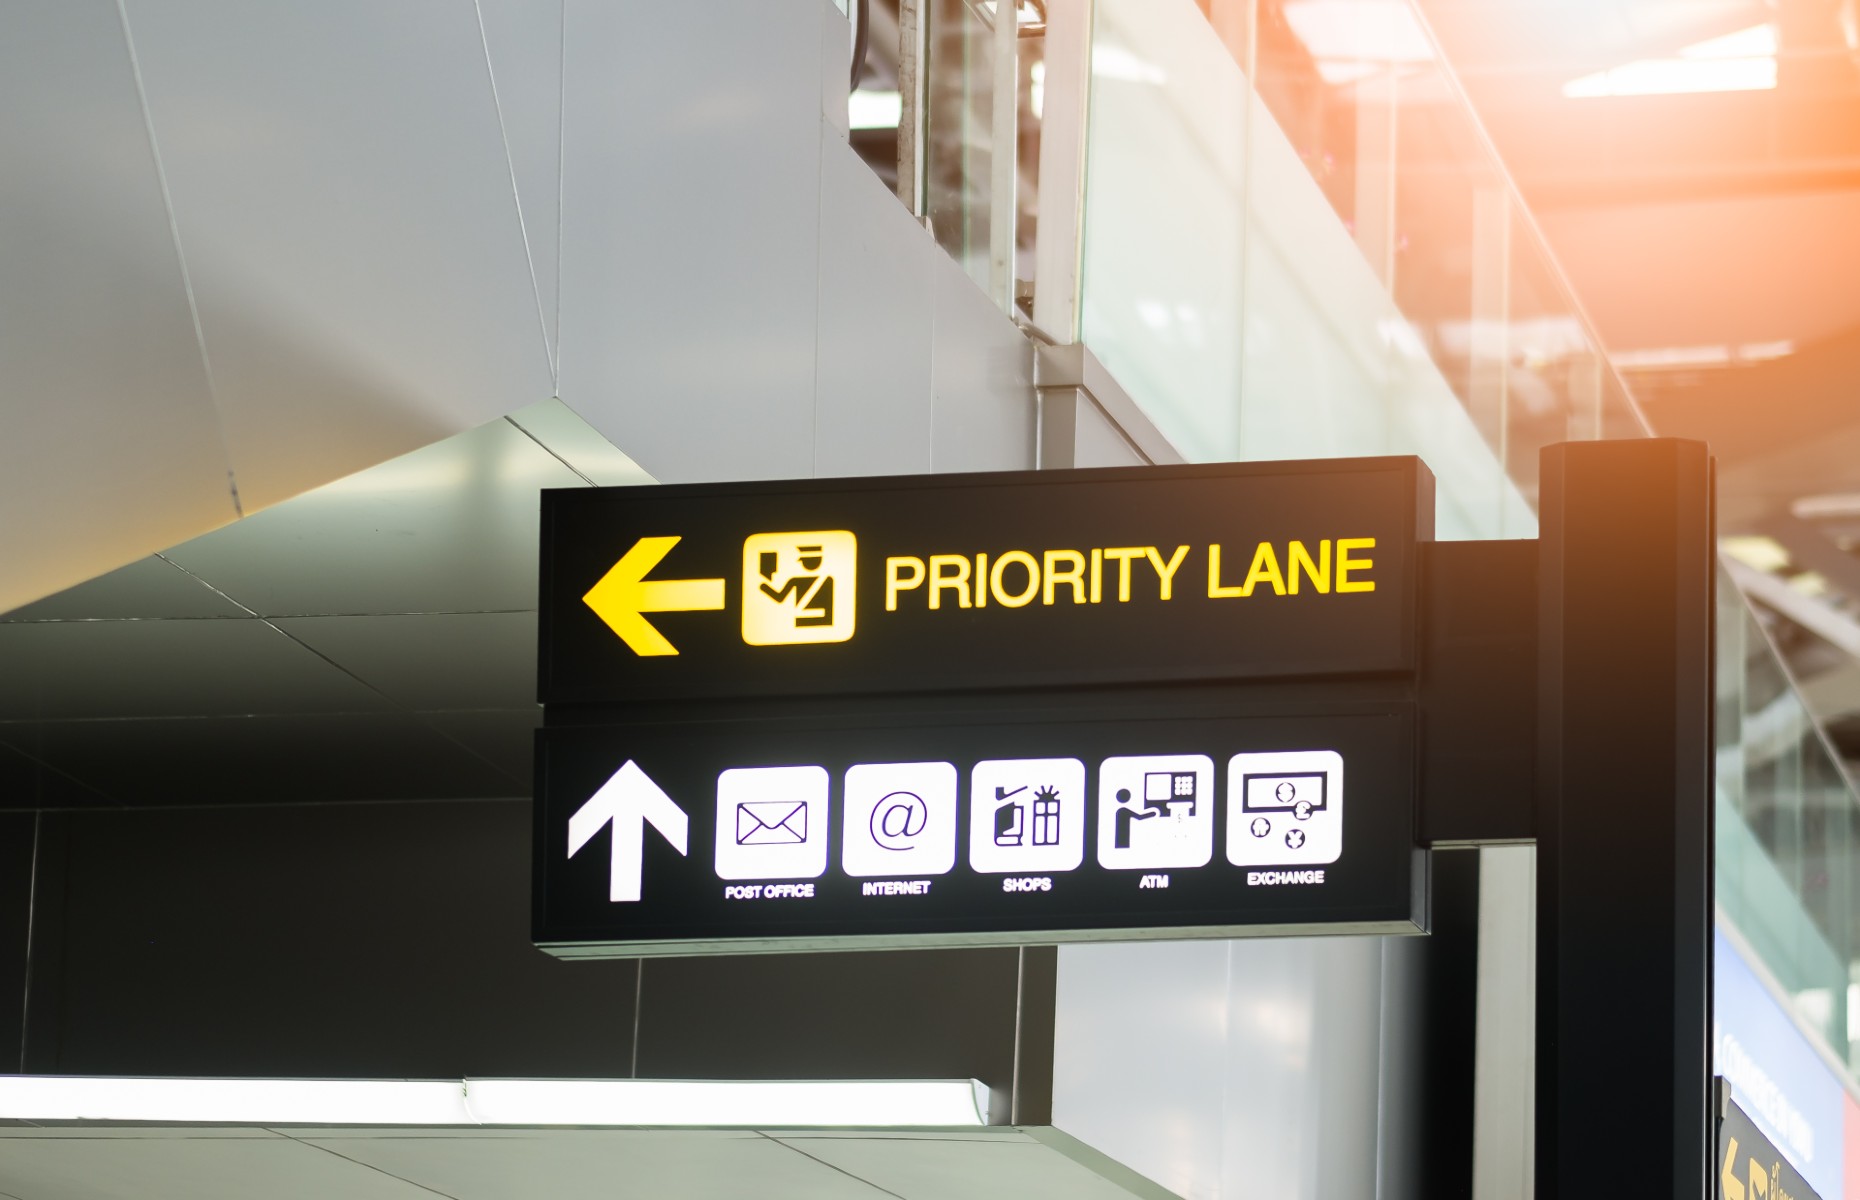 Priority boarding sign (Image: Thaspol Sangsee/Shutterstock)